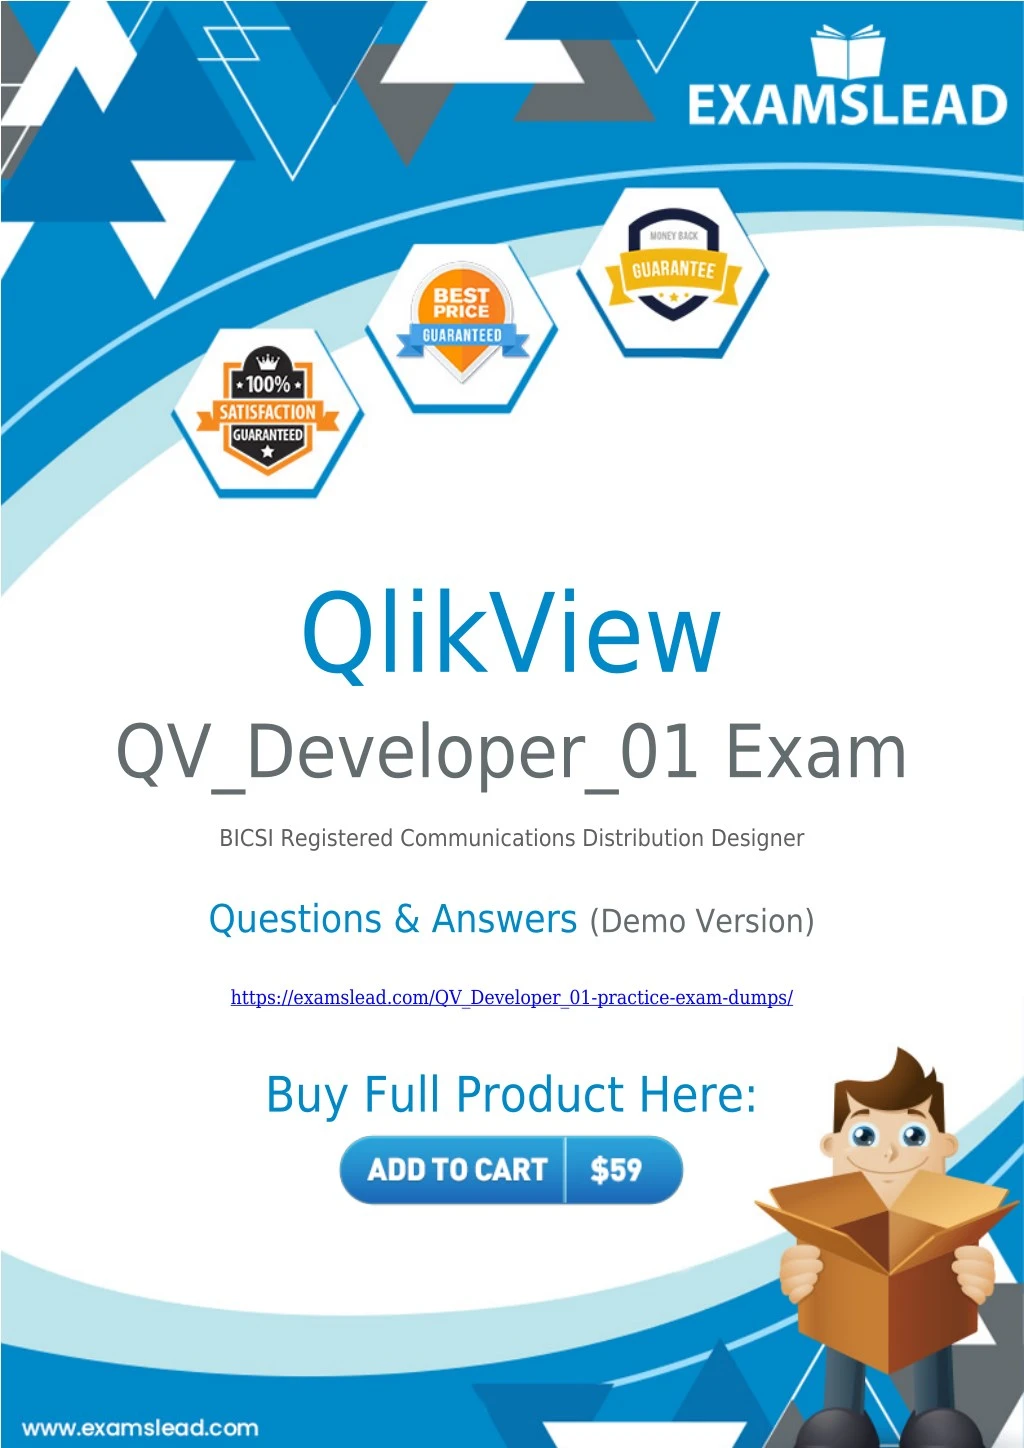 qlikview qv developer 01 exam